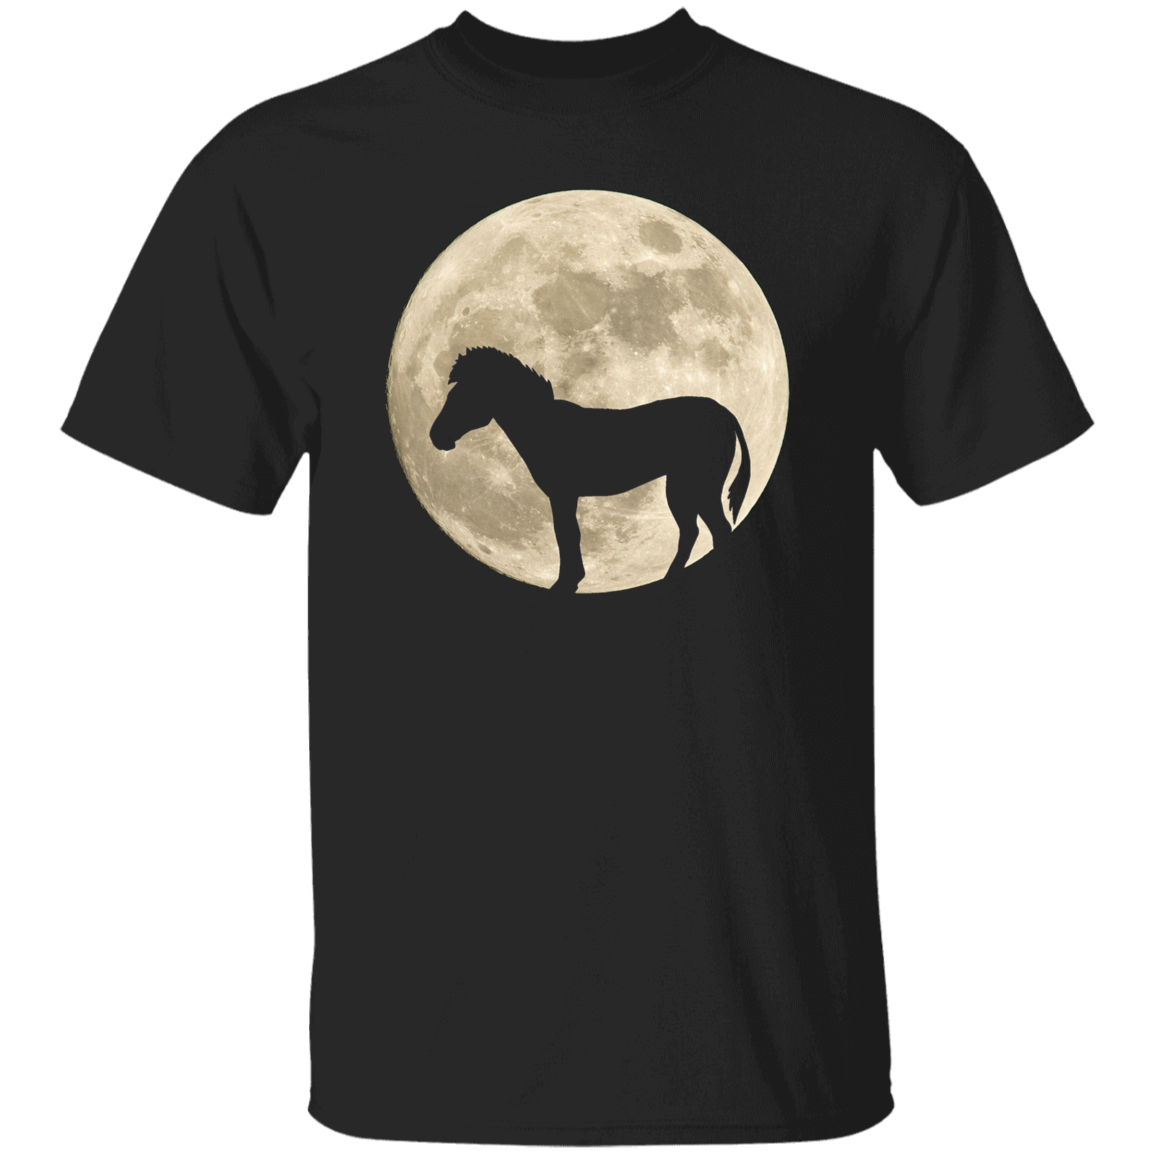 Zebra Moon - T-shirts, Hoodies and Sweatshirts